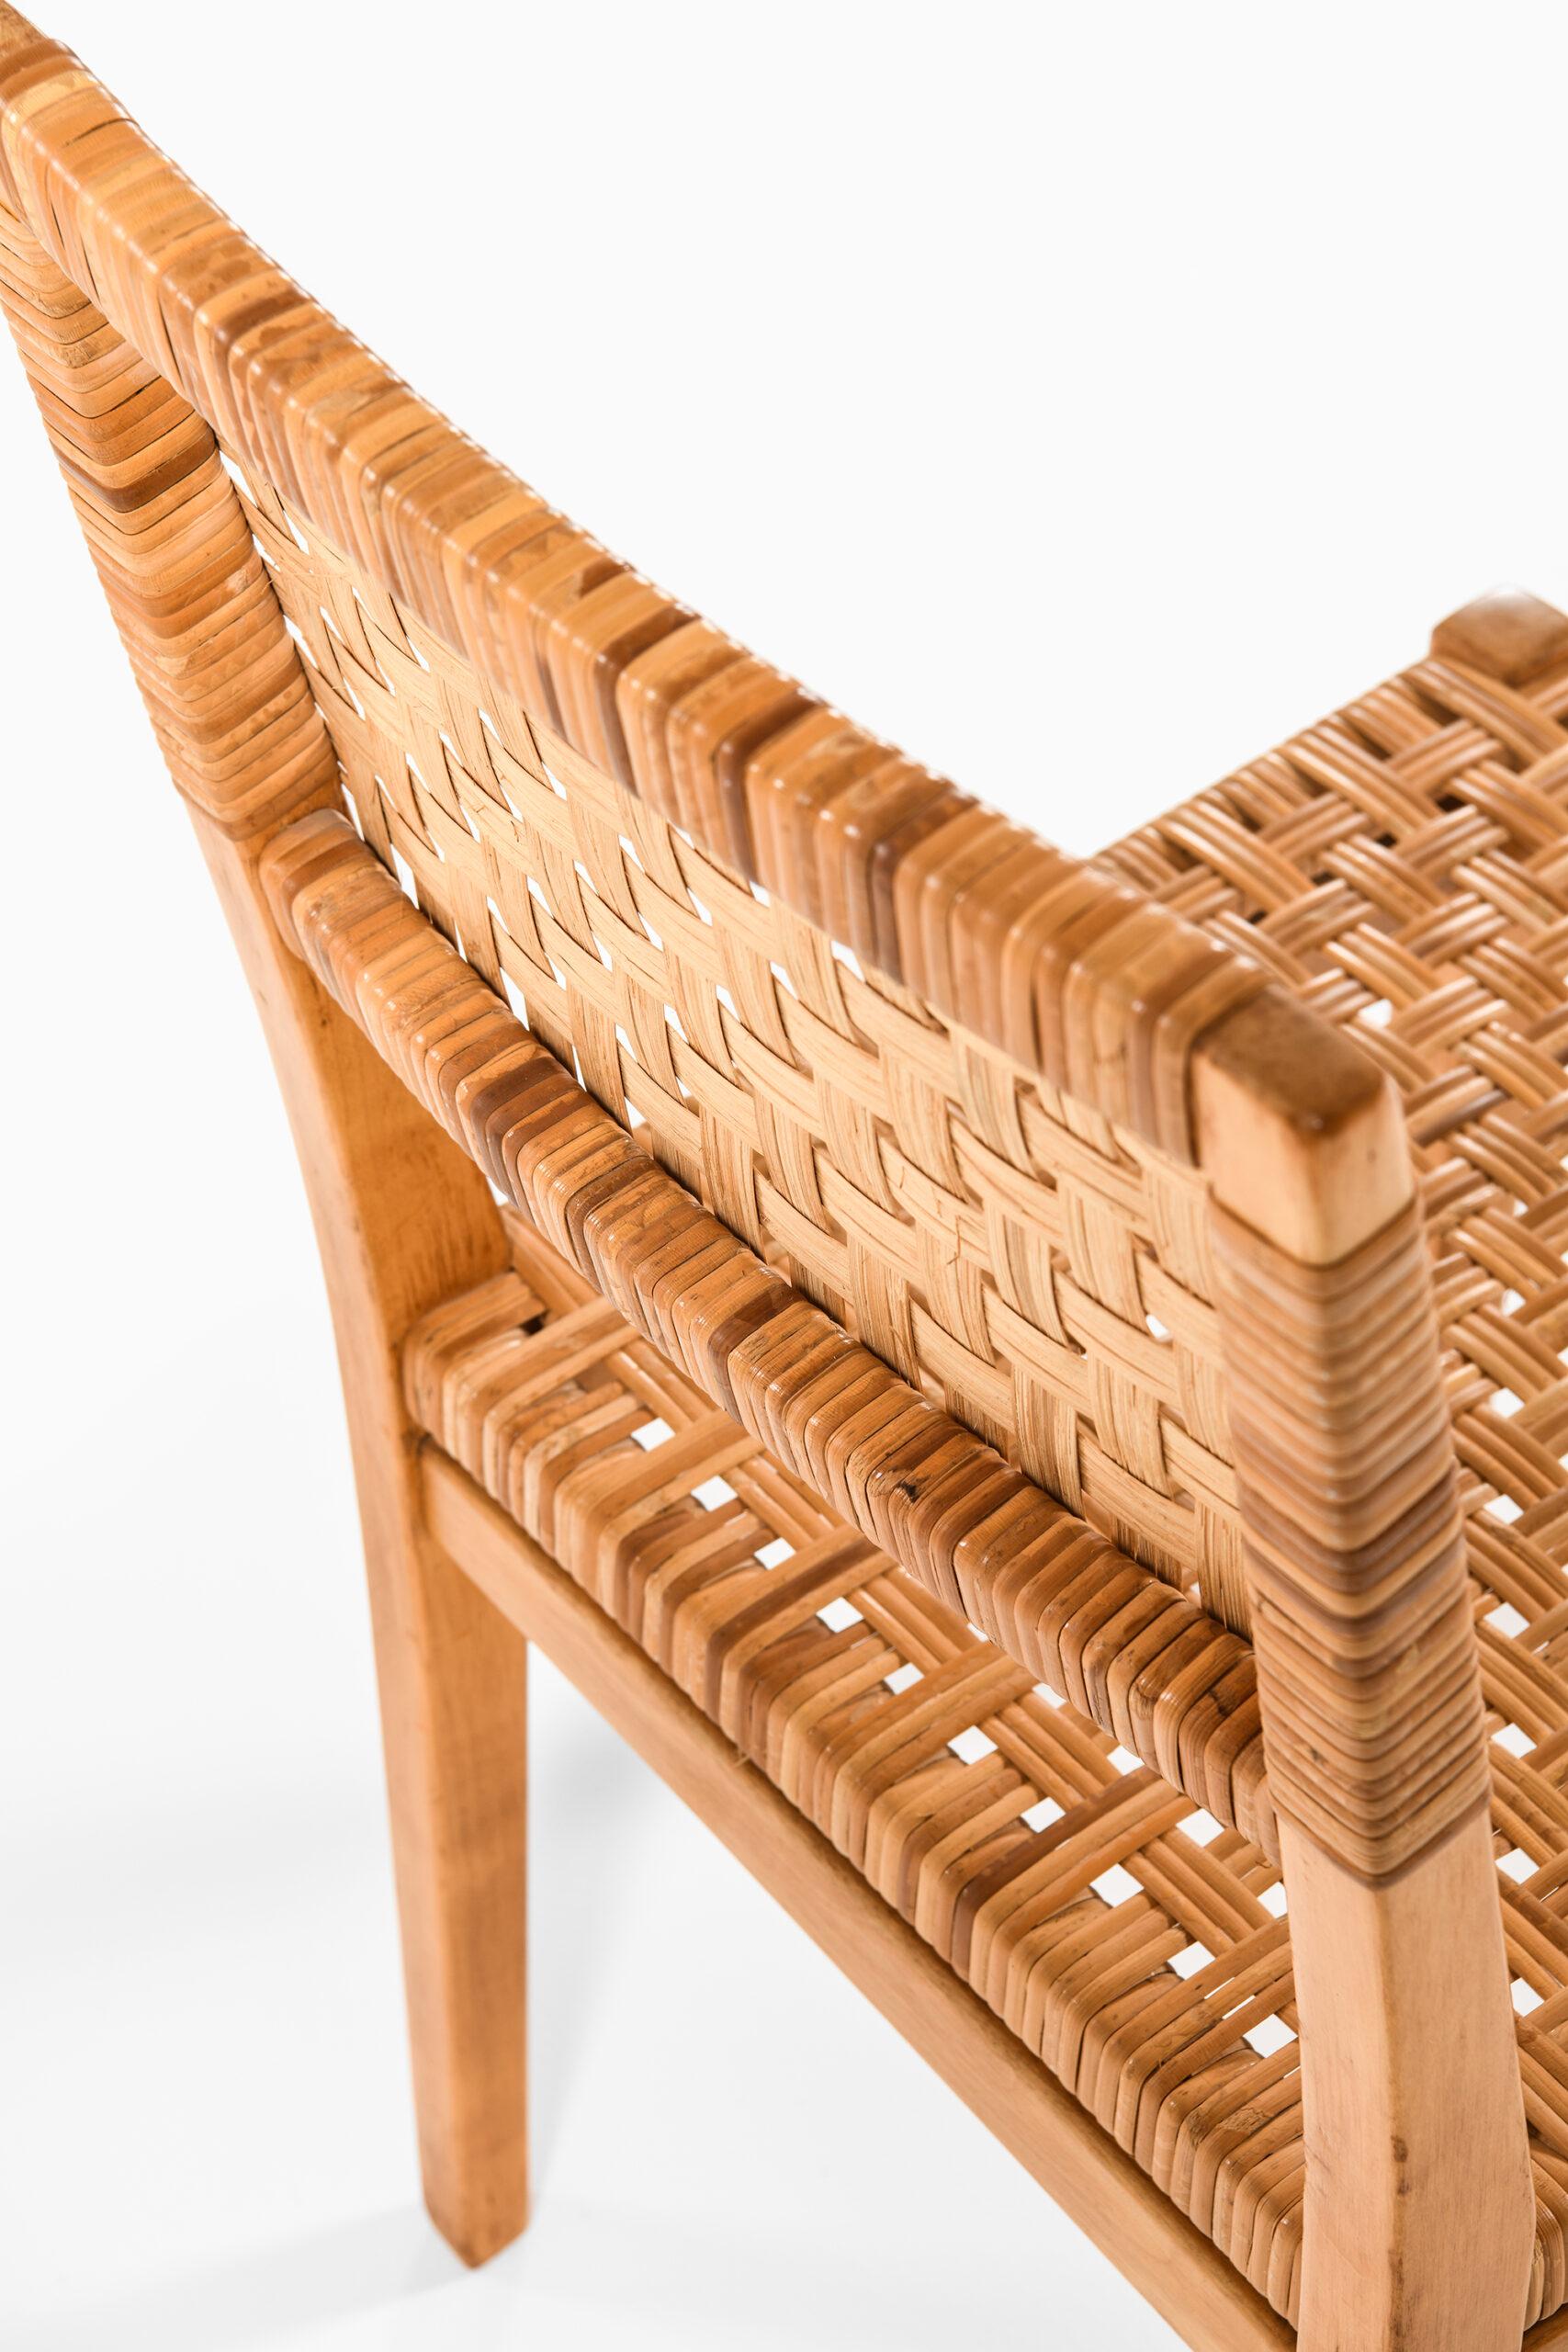 Scandinavian Modern Aino Aalto Dining Chairs Model 615 Produced by Artek in Finland For Sale